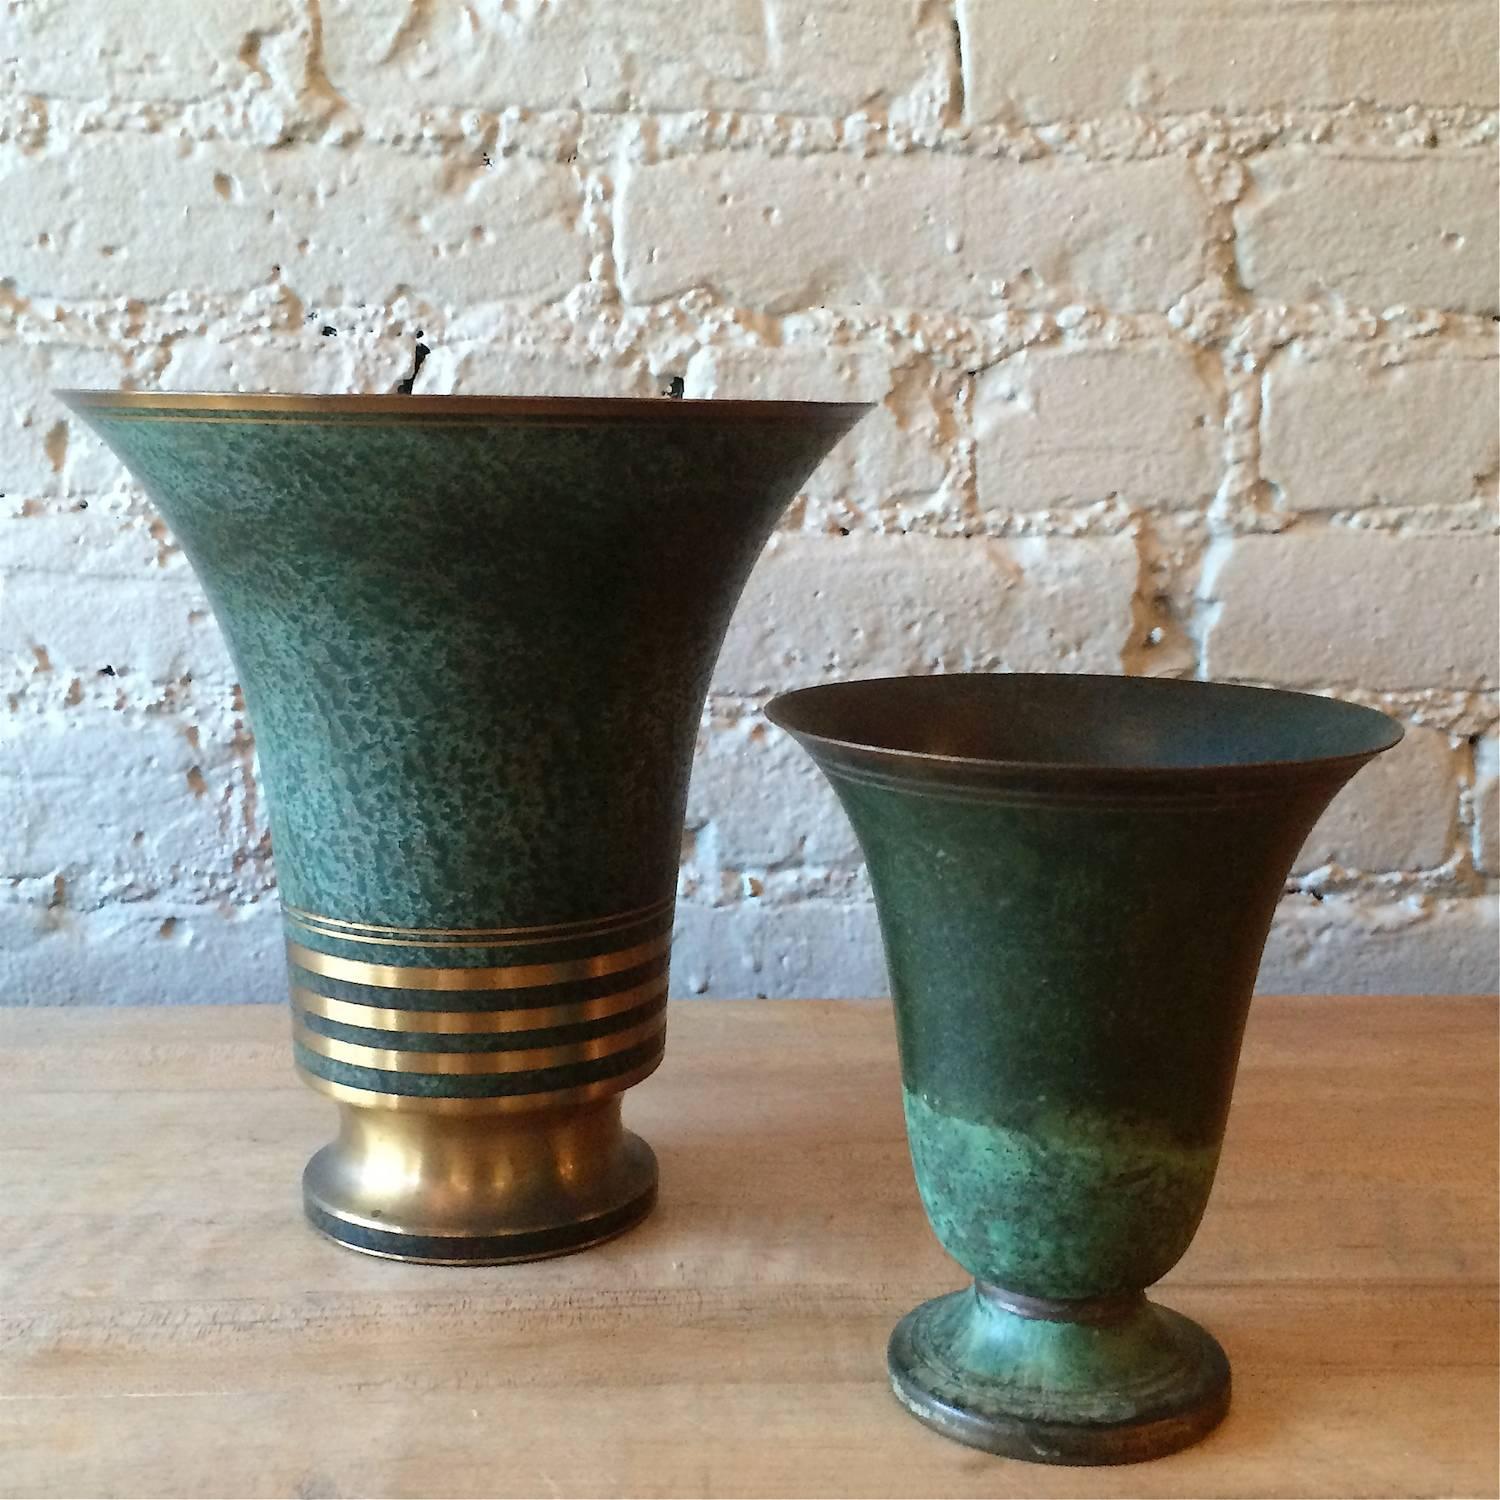 Pair of bronze vases with verdigis patina designed by Carl Sorensen, circa 1940s. Both vases are signed.

Large vase: 7in d x 8in ht

Small vase: 5in d x 6in ht.